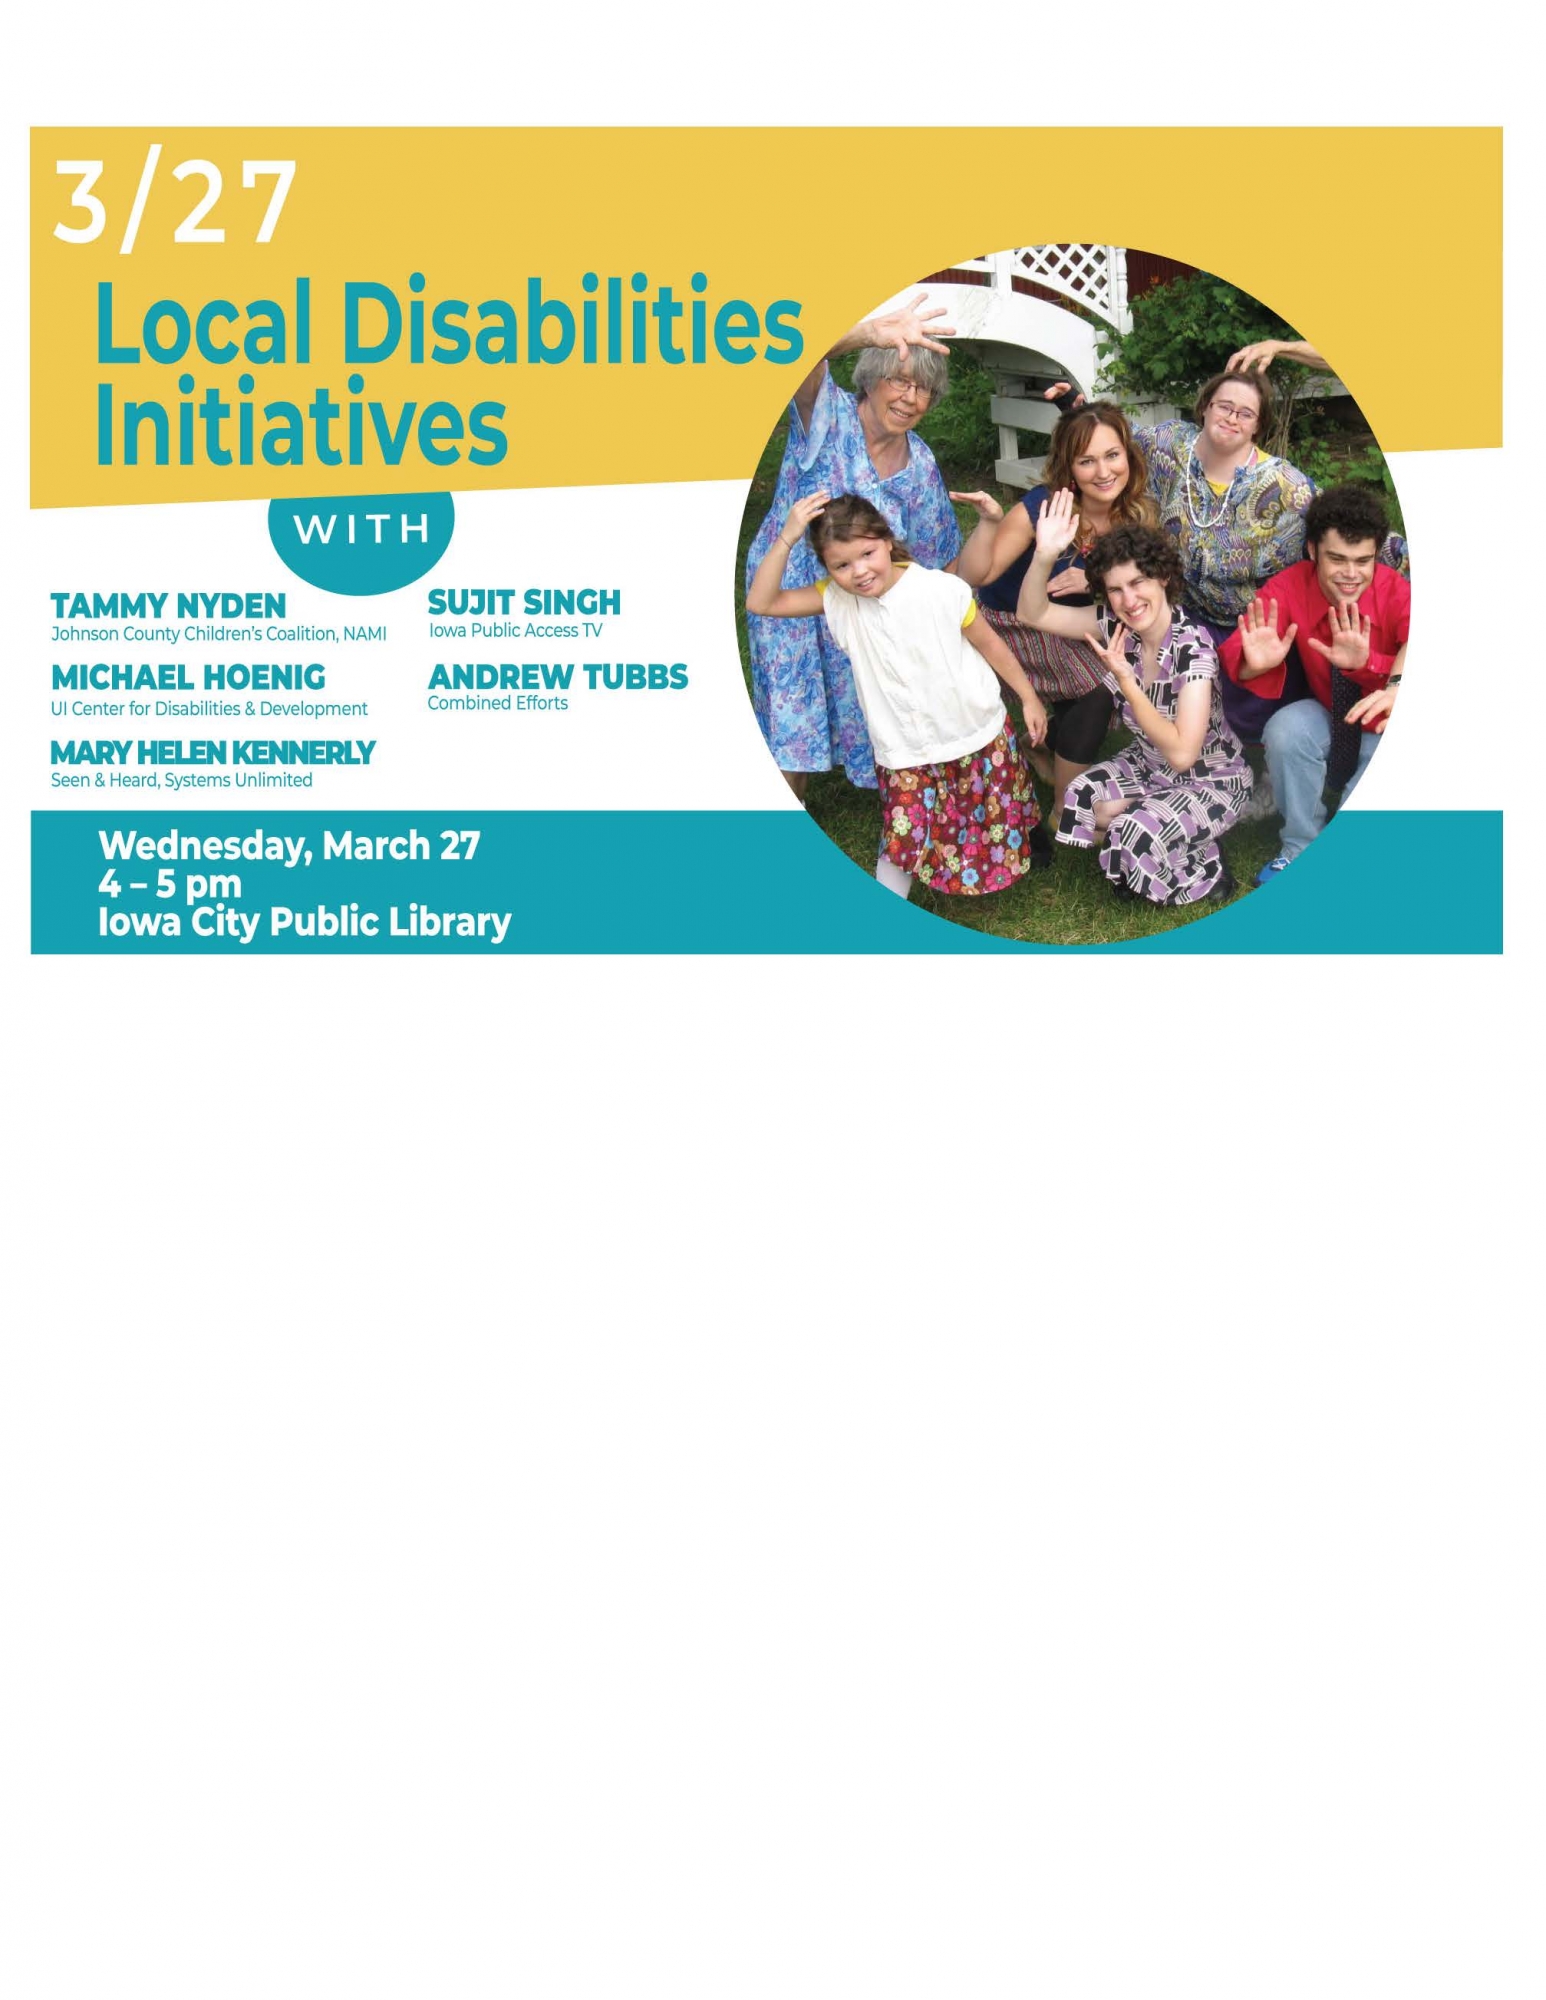 Local Disabilities Initiative